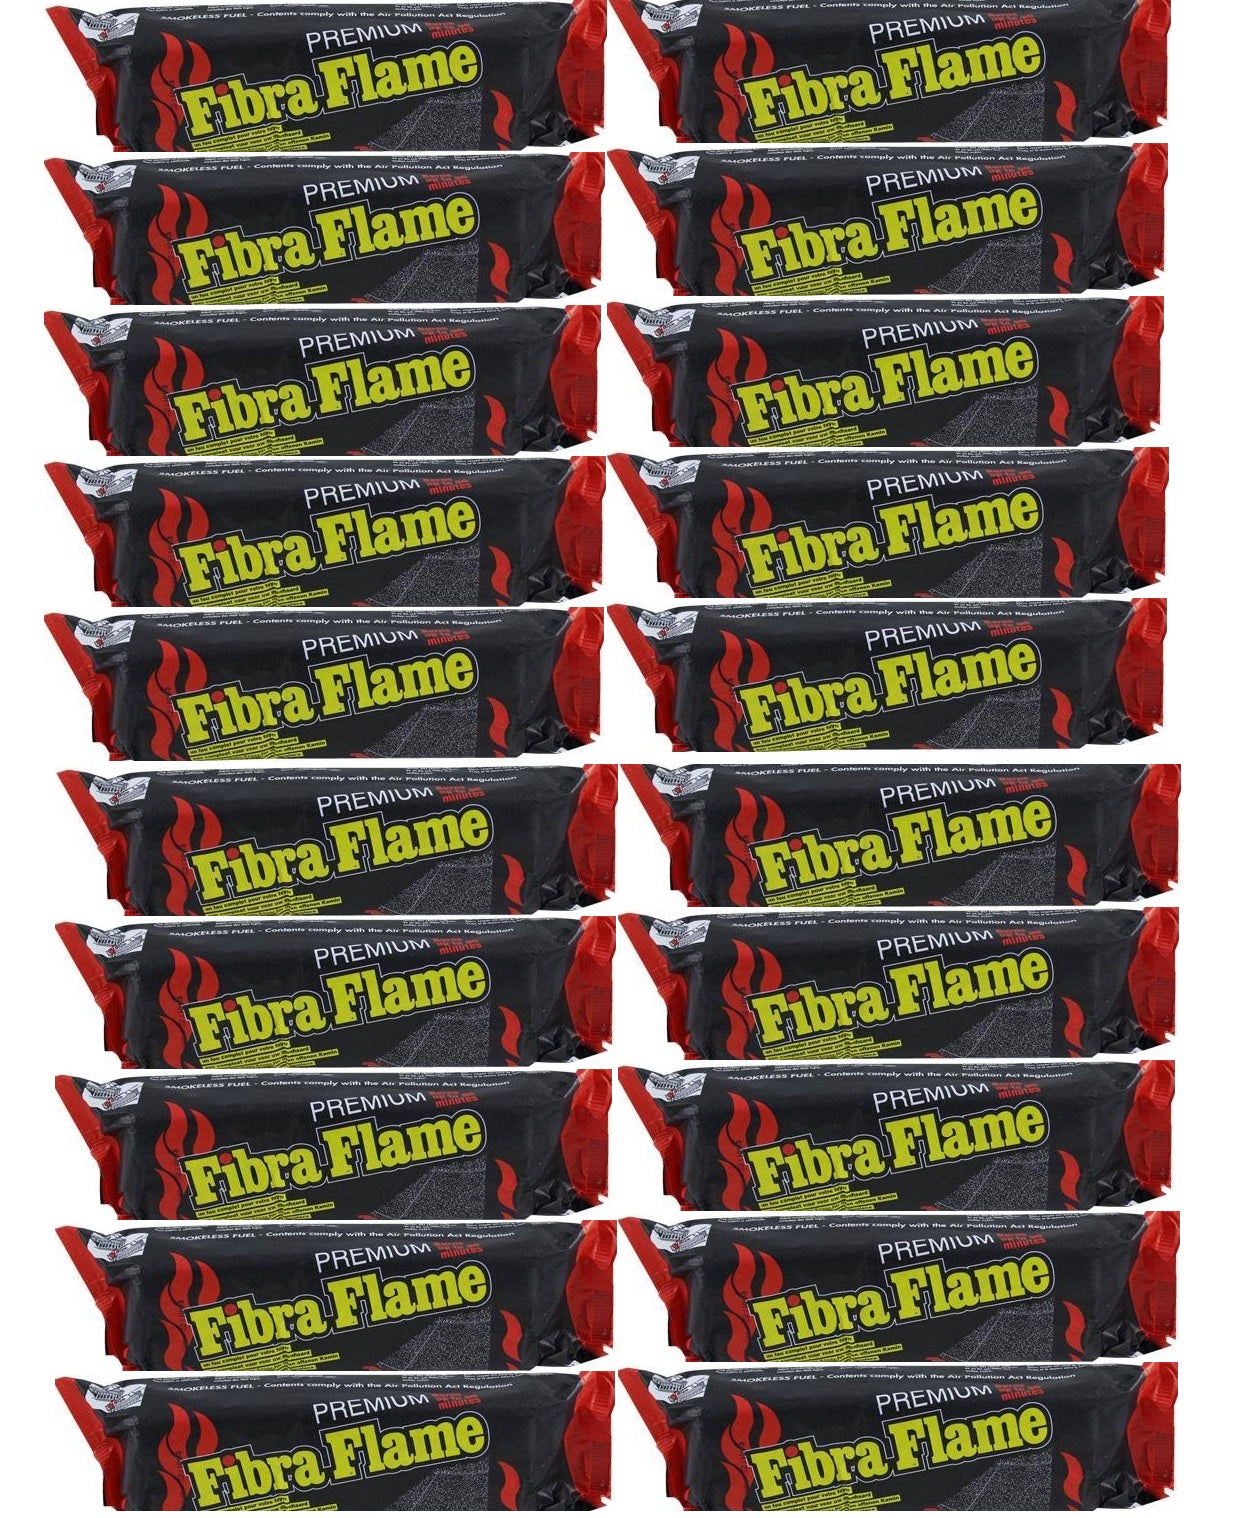 20 x Fibra Flame Premium Fire log 700G